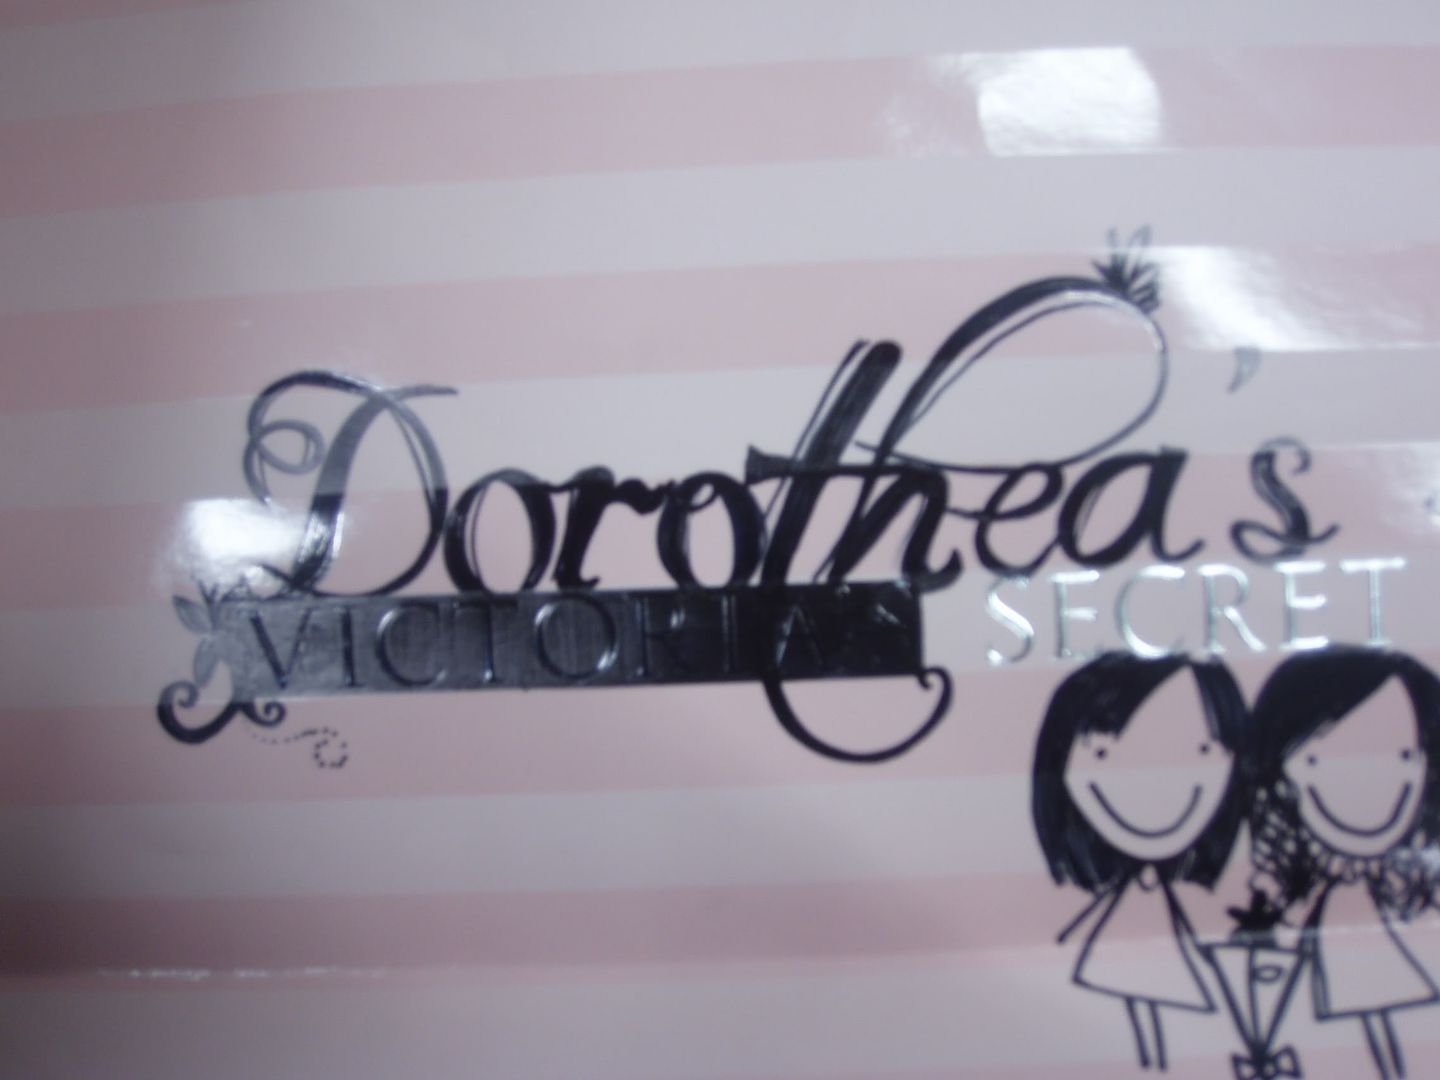 DOROTHEA'S SECRET